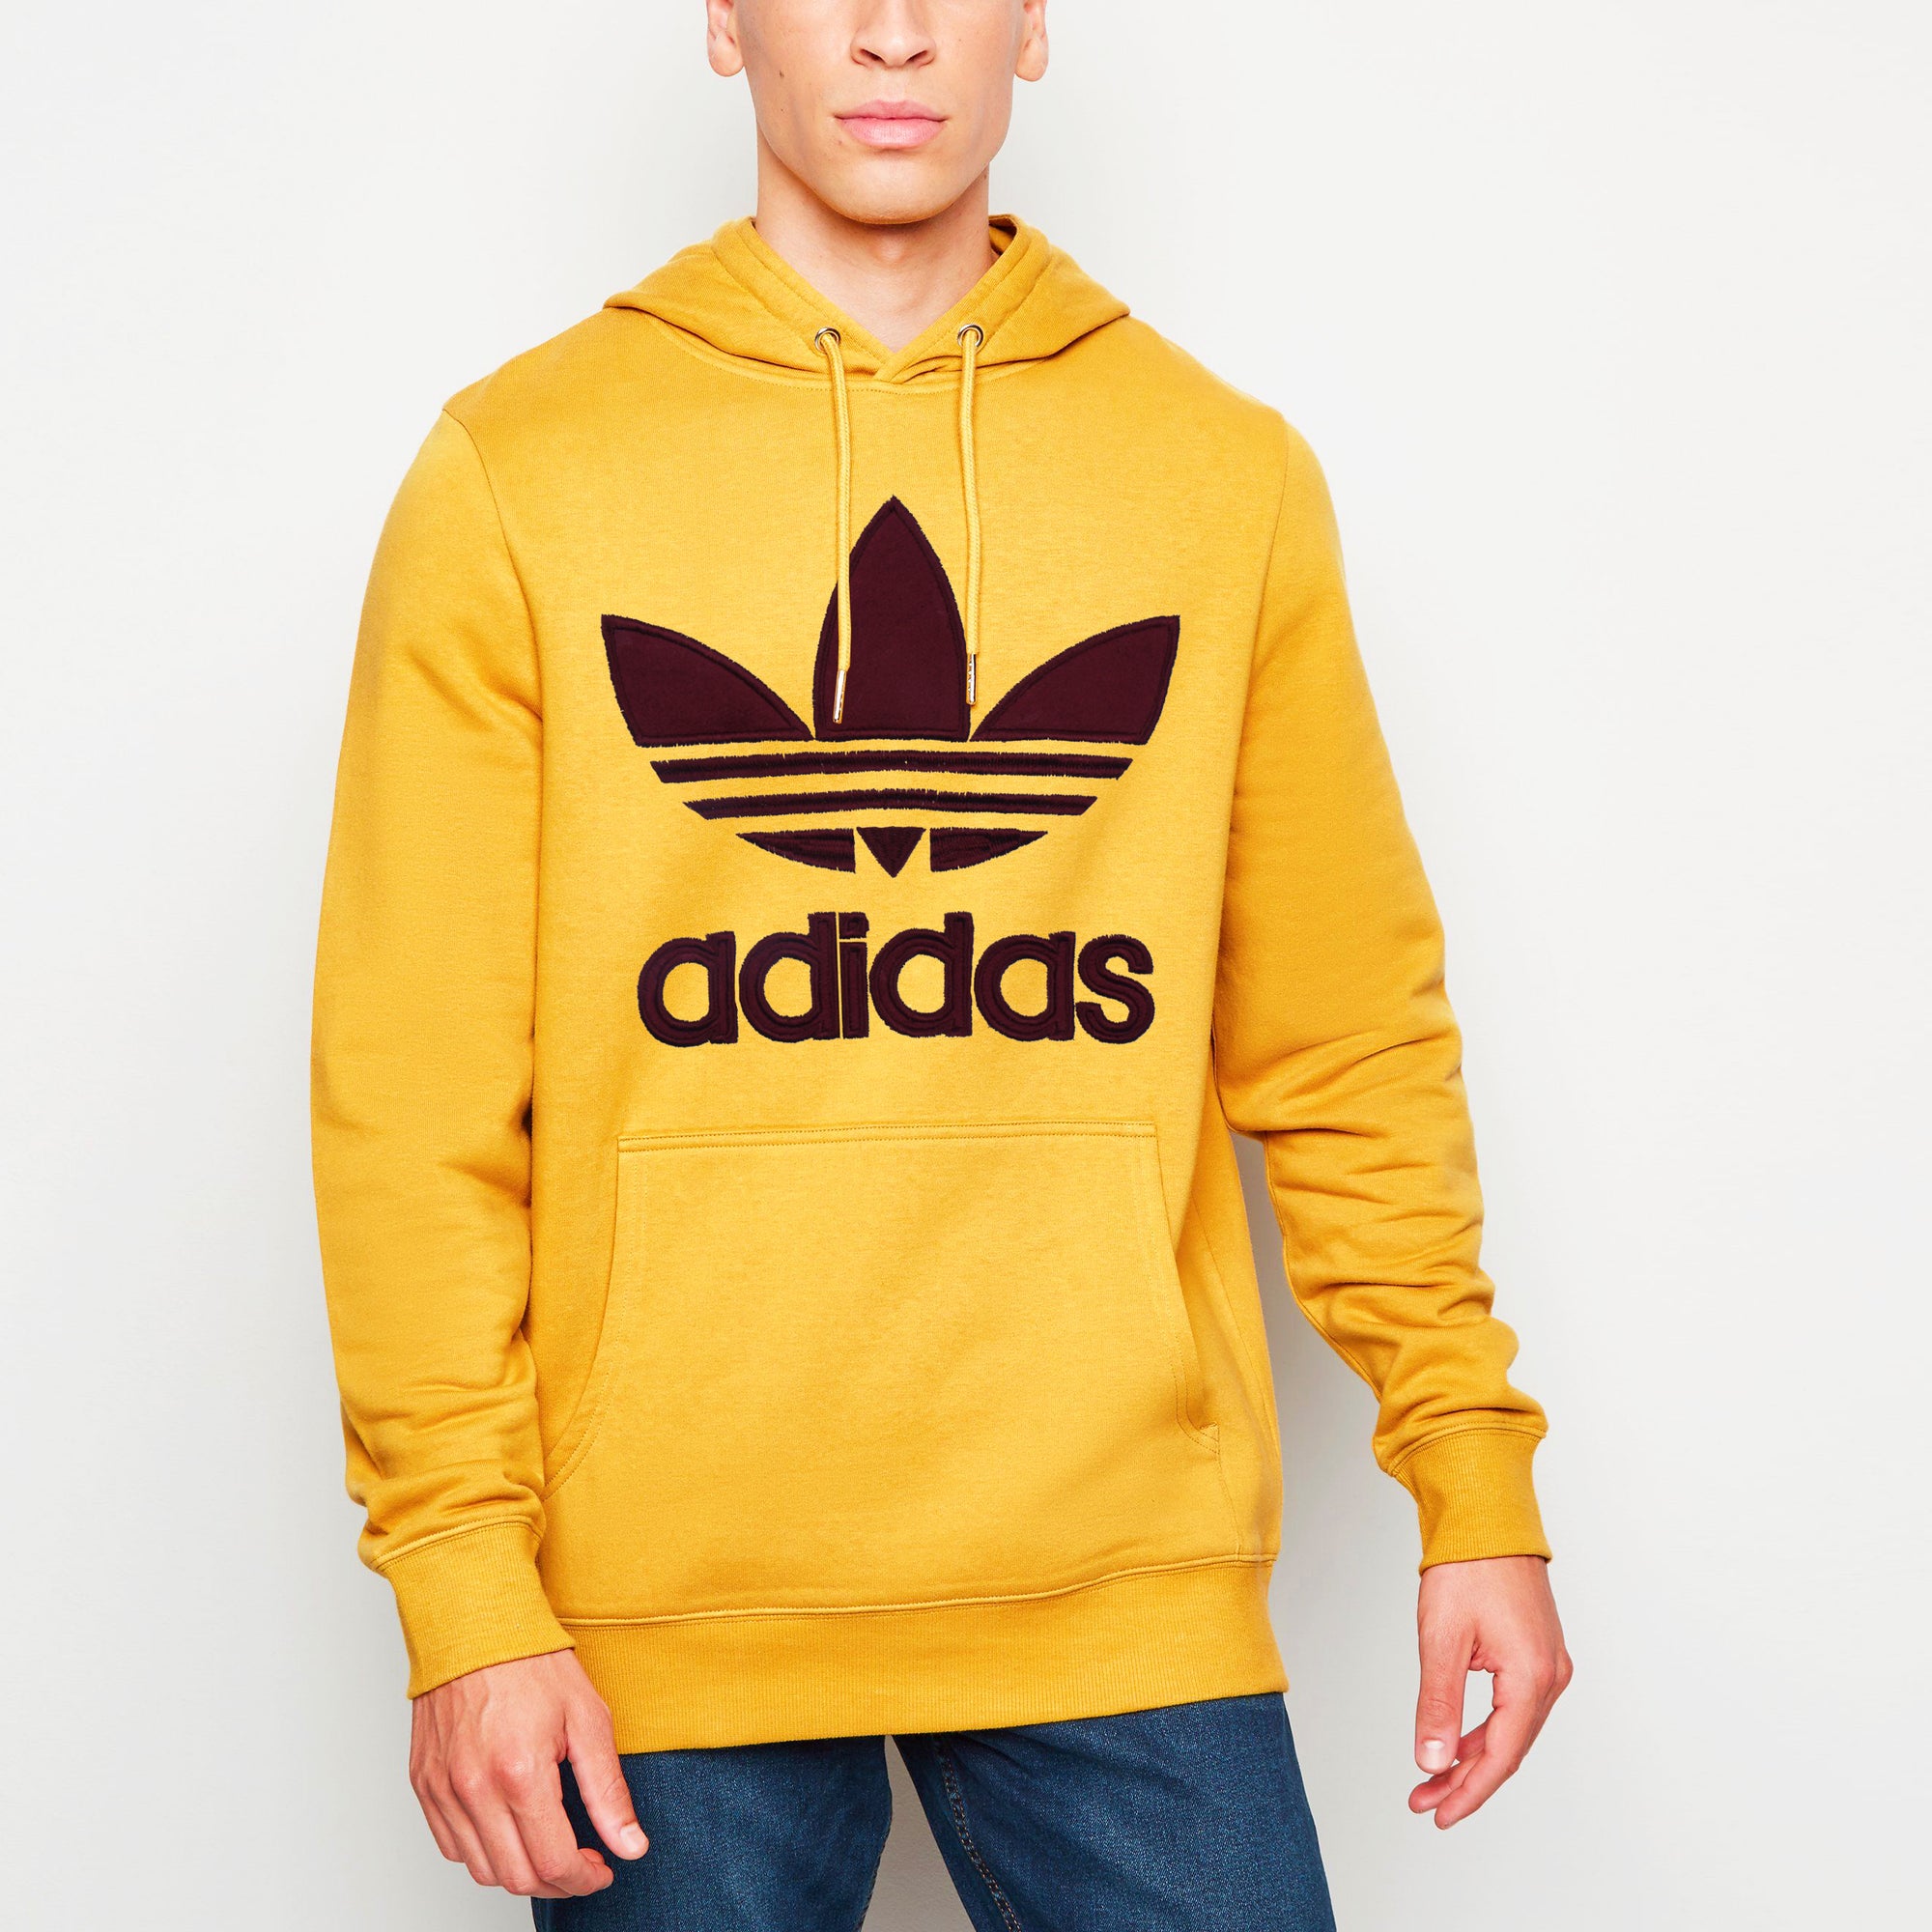 adidas yellow hoodie mens